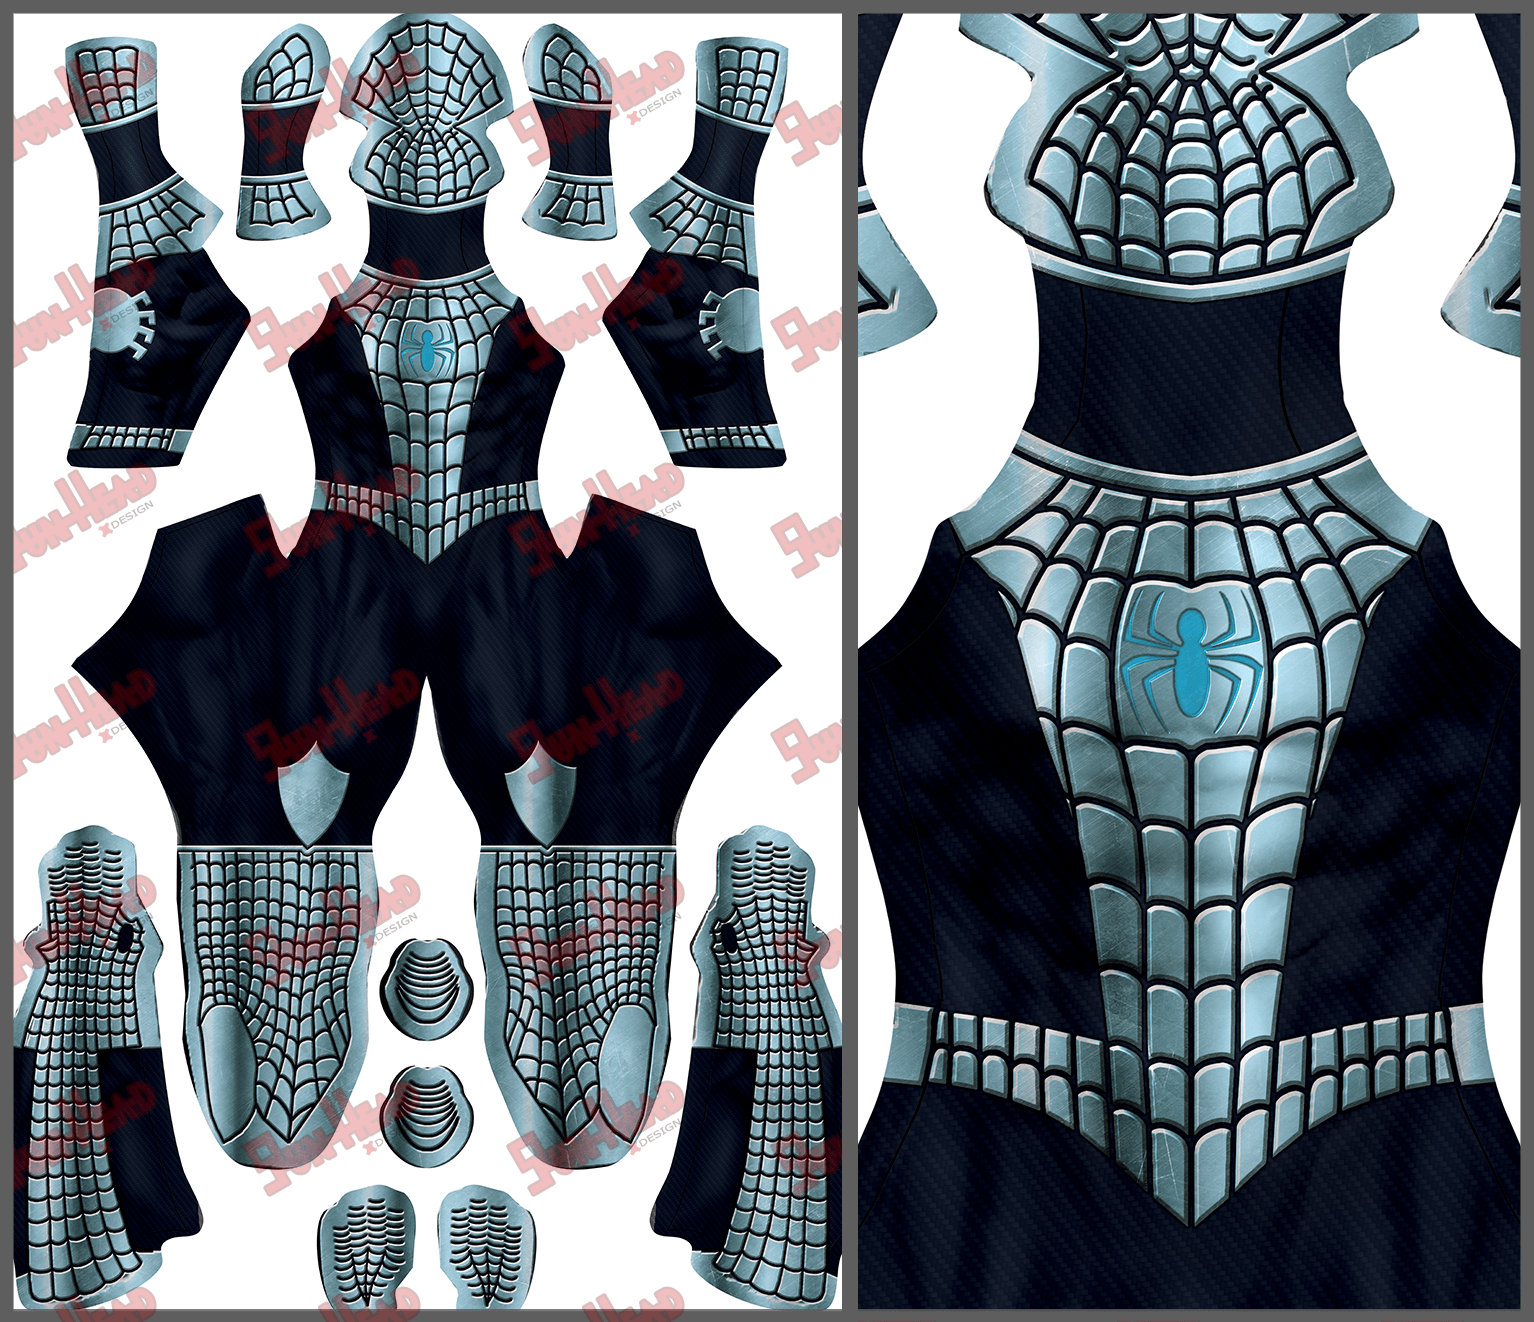 spider armor mk1